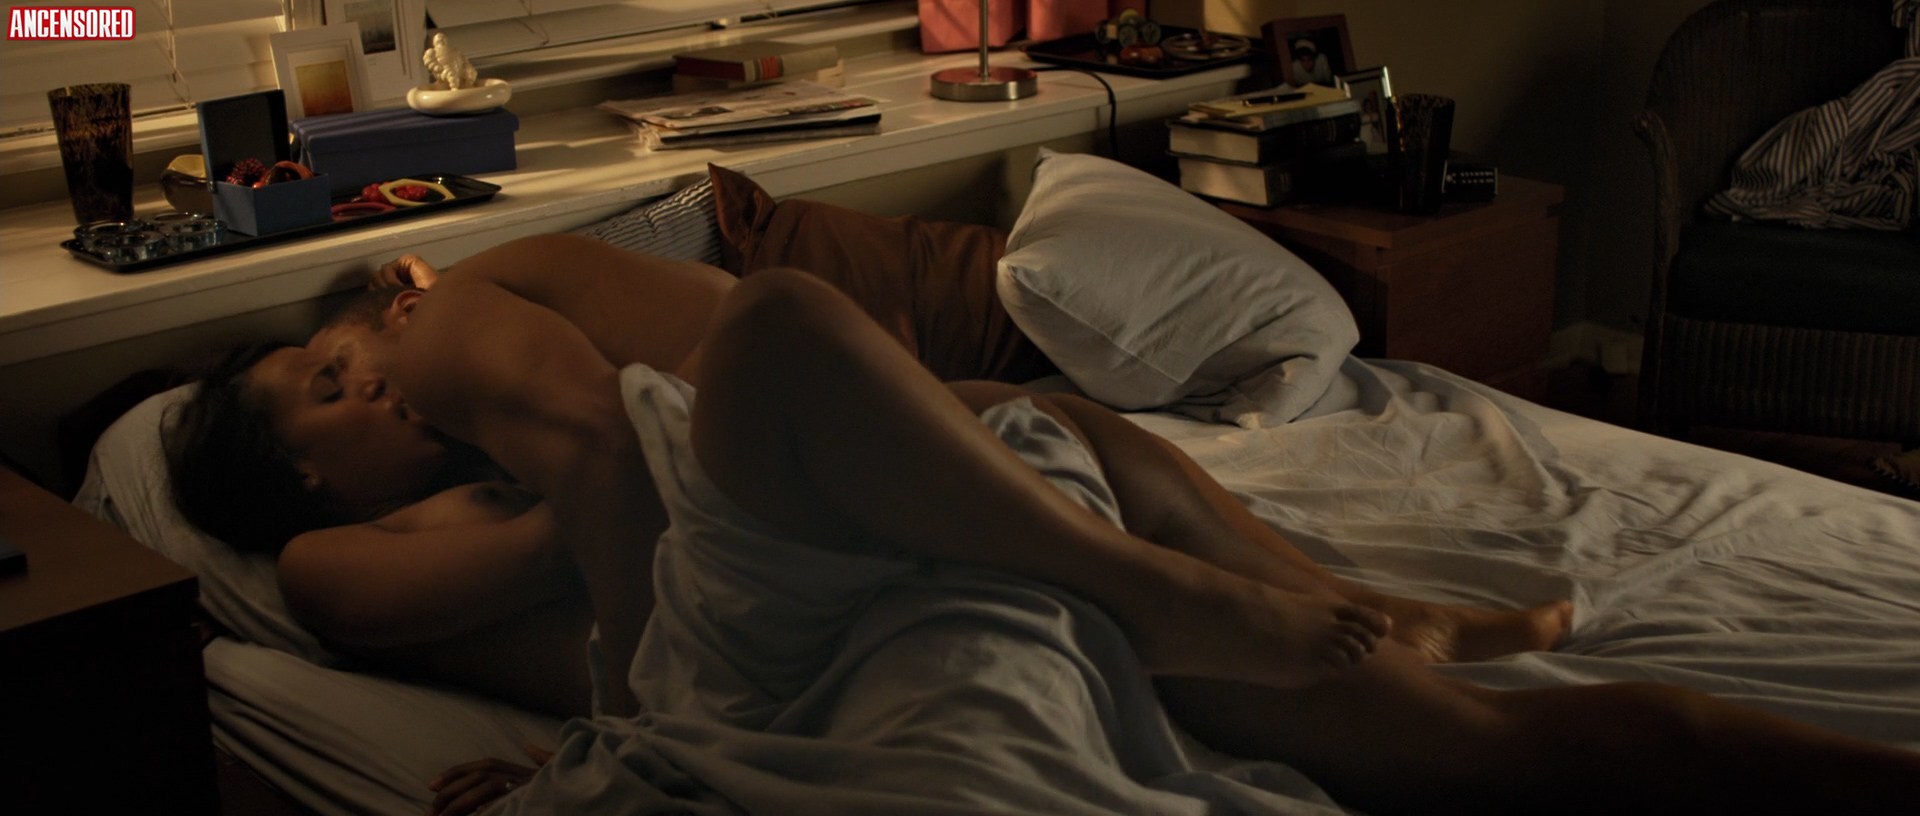 Керри Вашингтон nude pics.